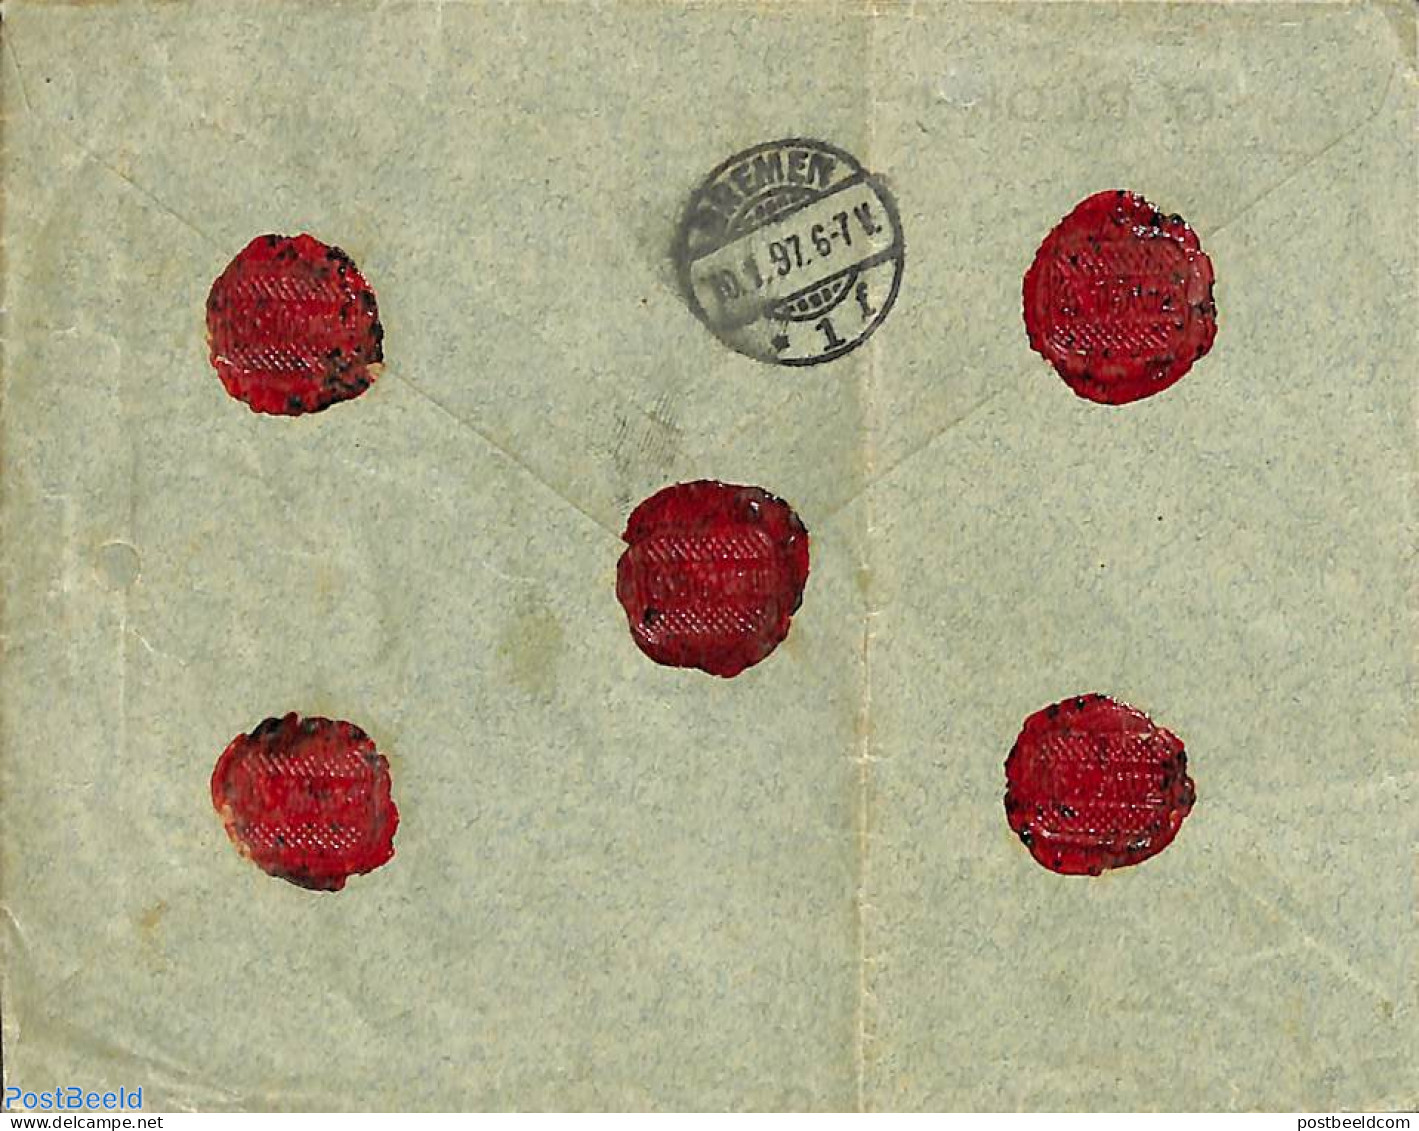 Netherlands 1897 Registered Cover From Amsterdam To Bremen. See Both Postmarks And Princess Wilhelmina (hangend Haar) .. - Cartas & Documentos